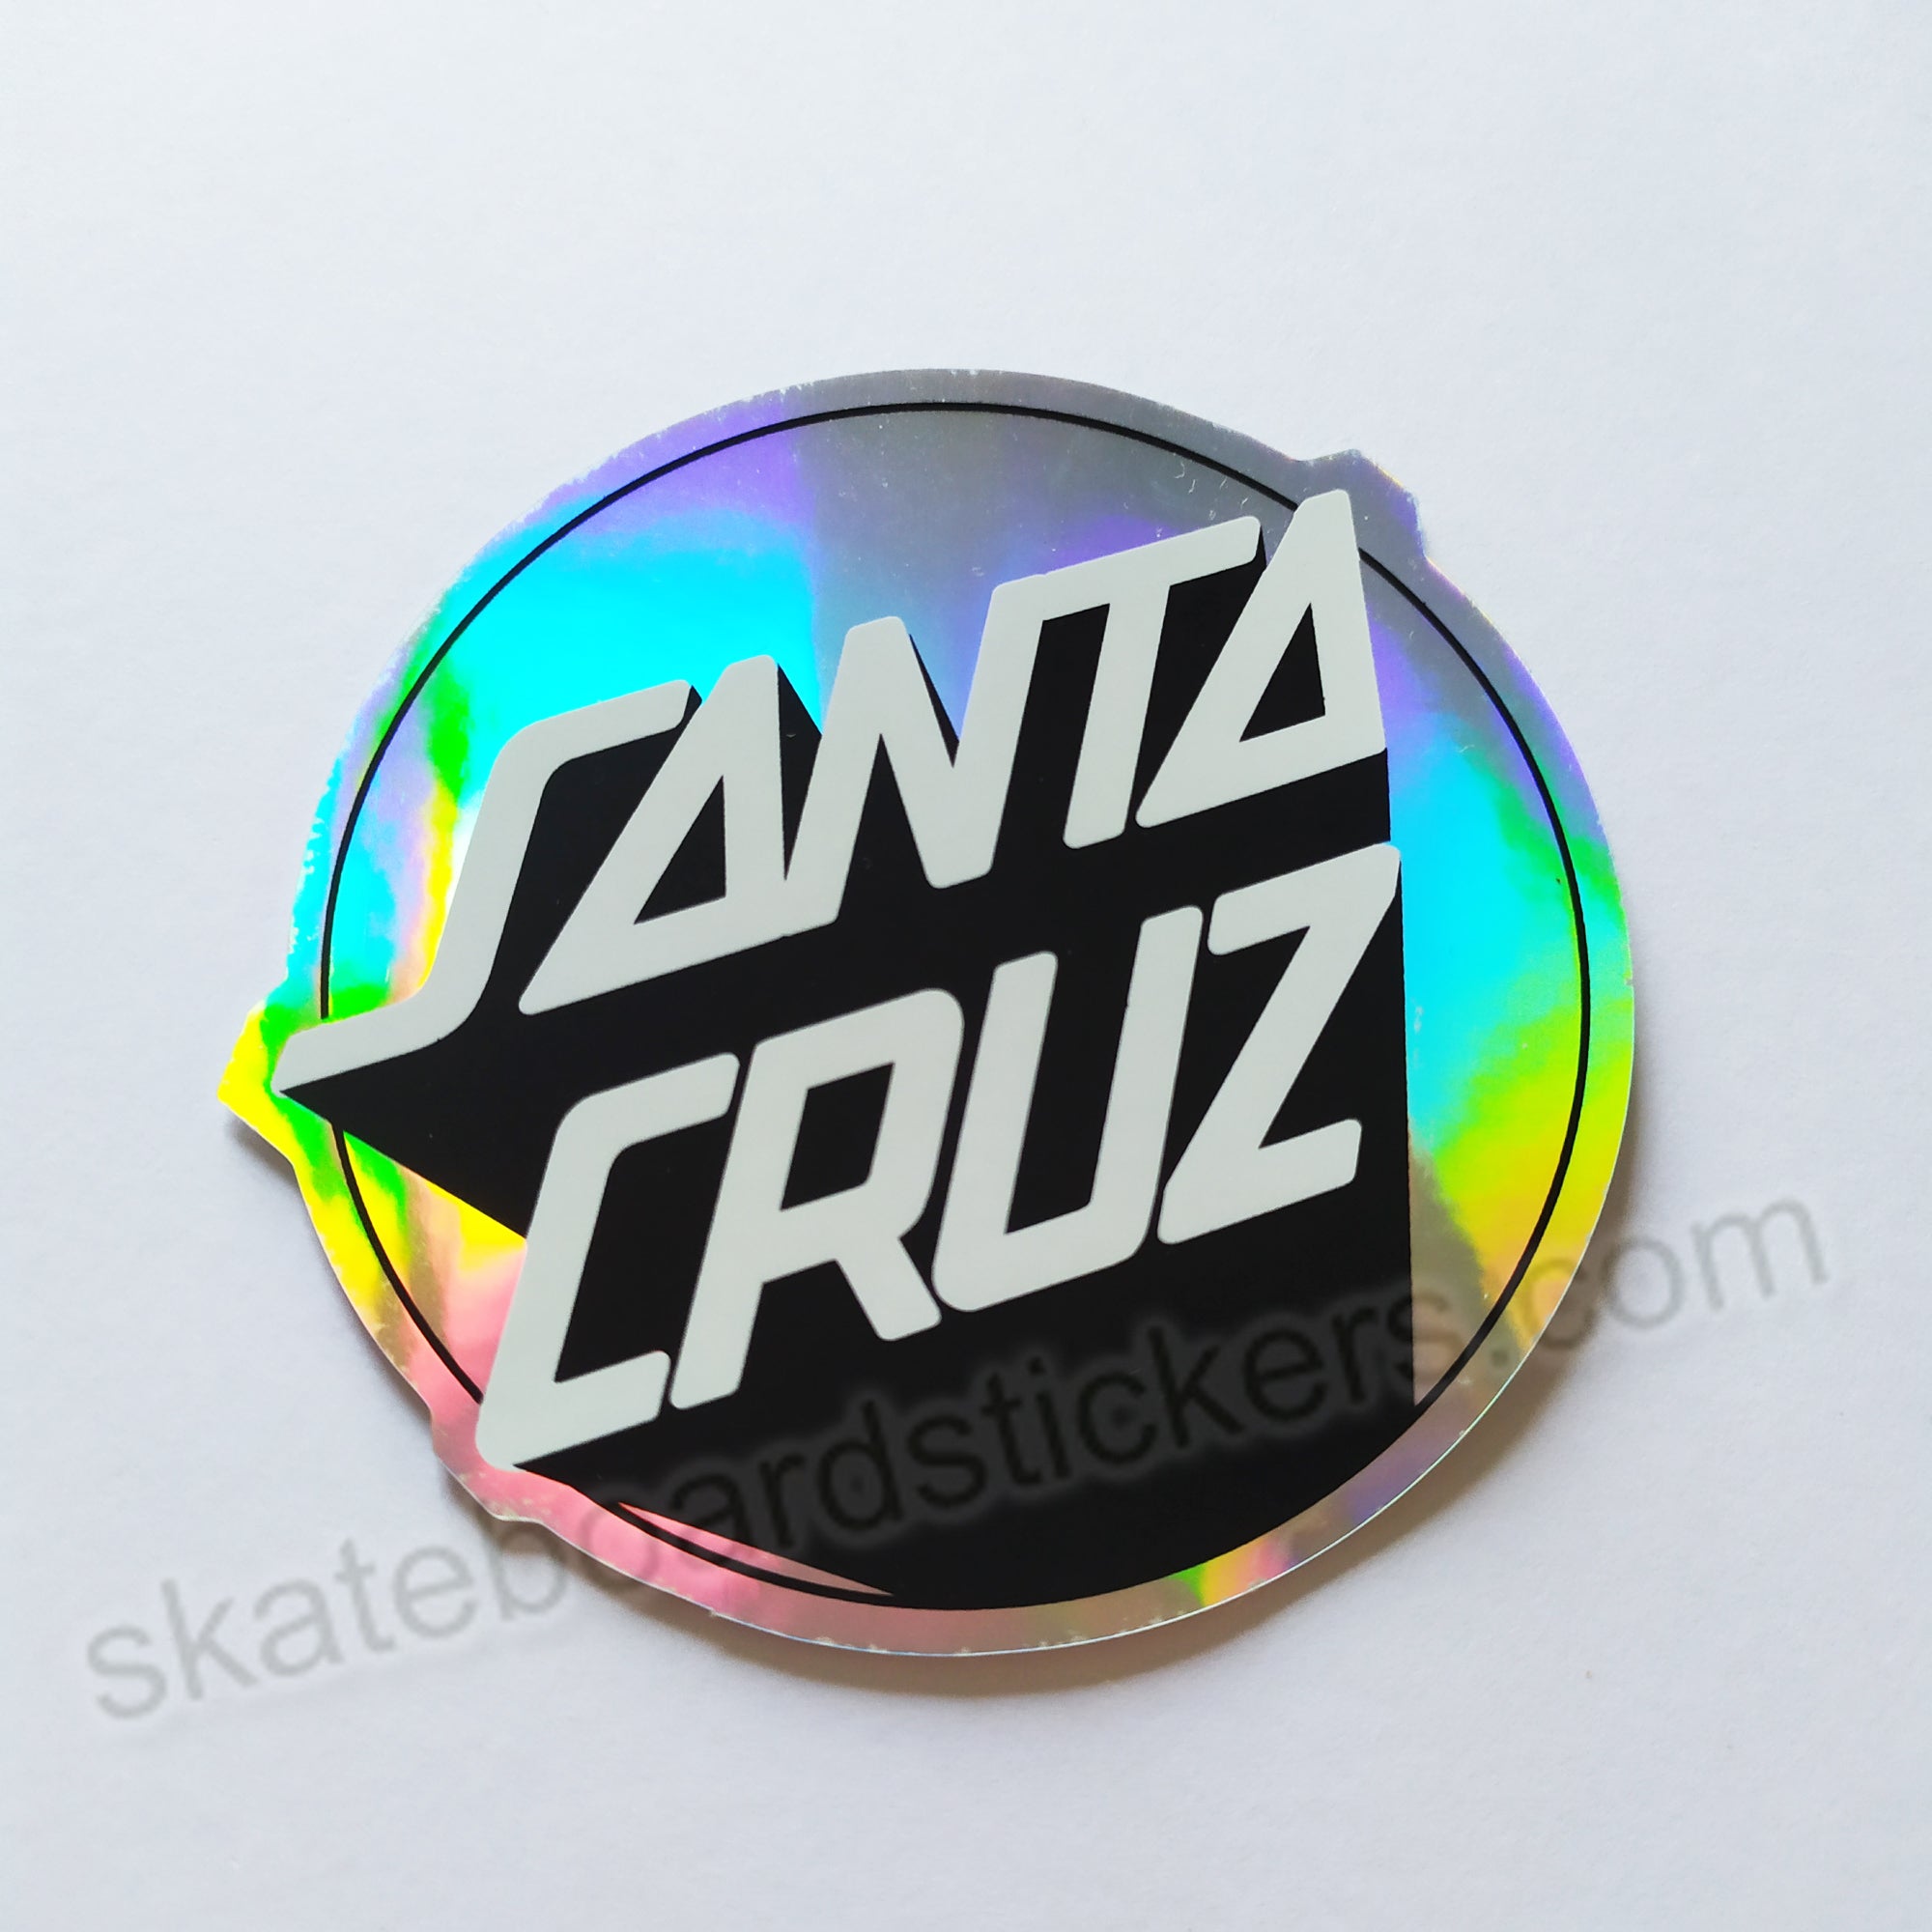 Santa Cruz Skateboard Sticker - SkateboardStickers.com